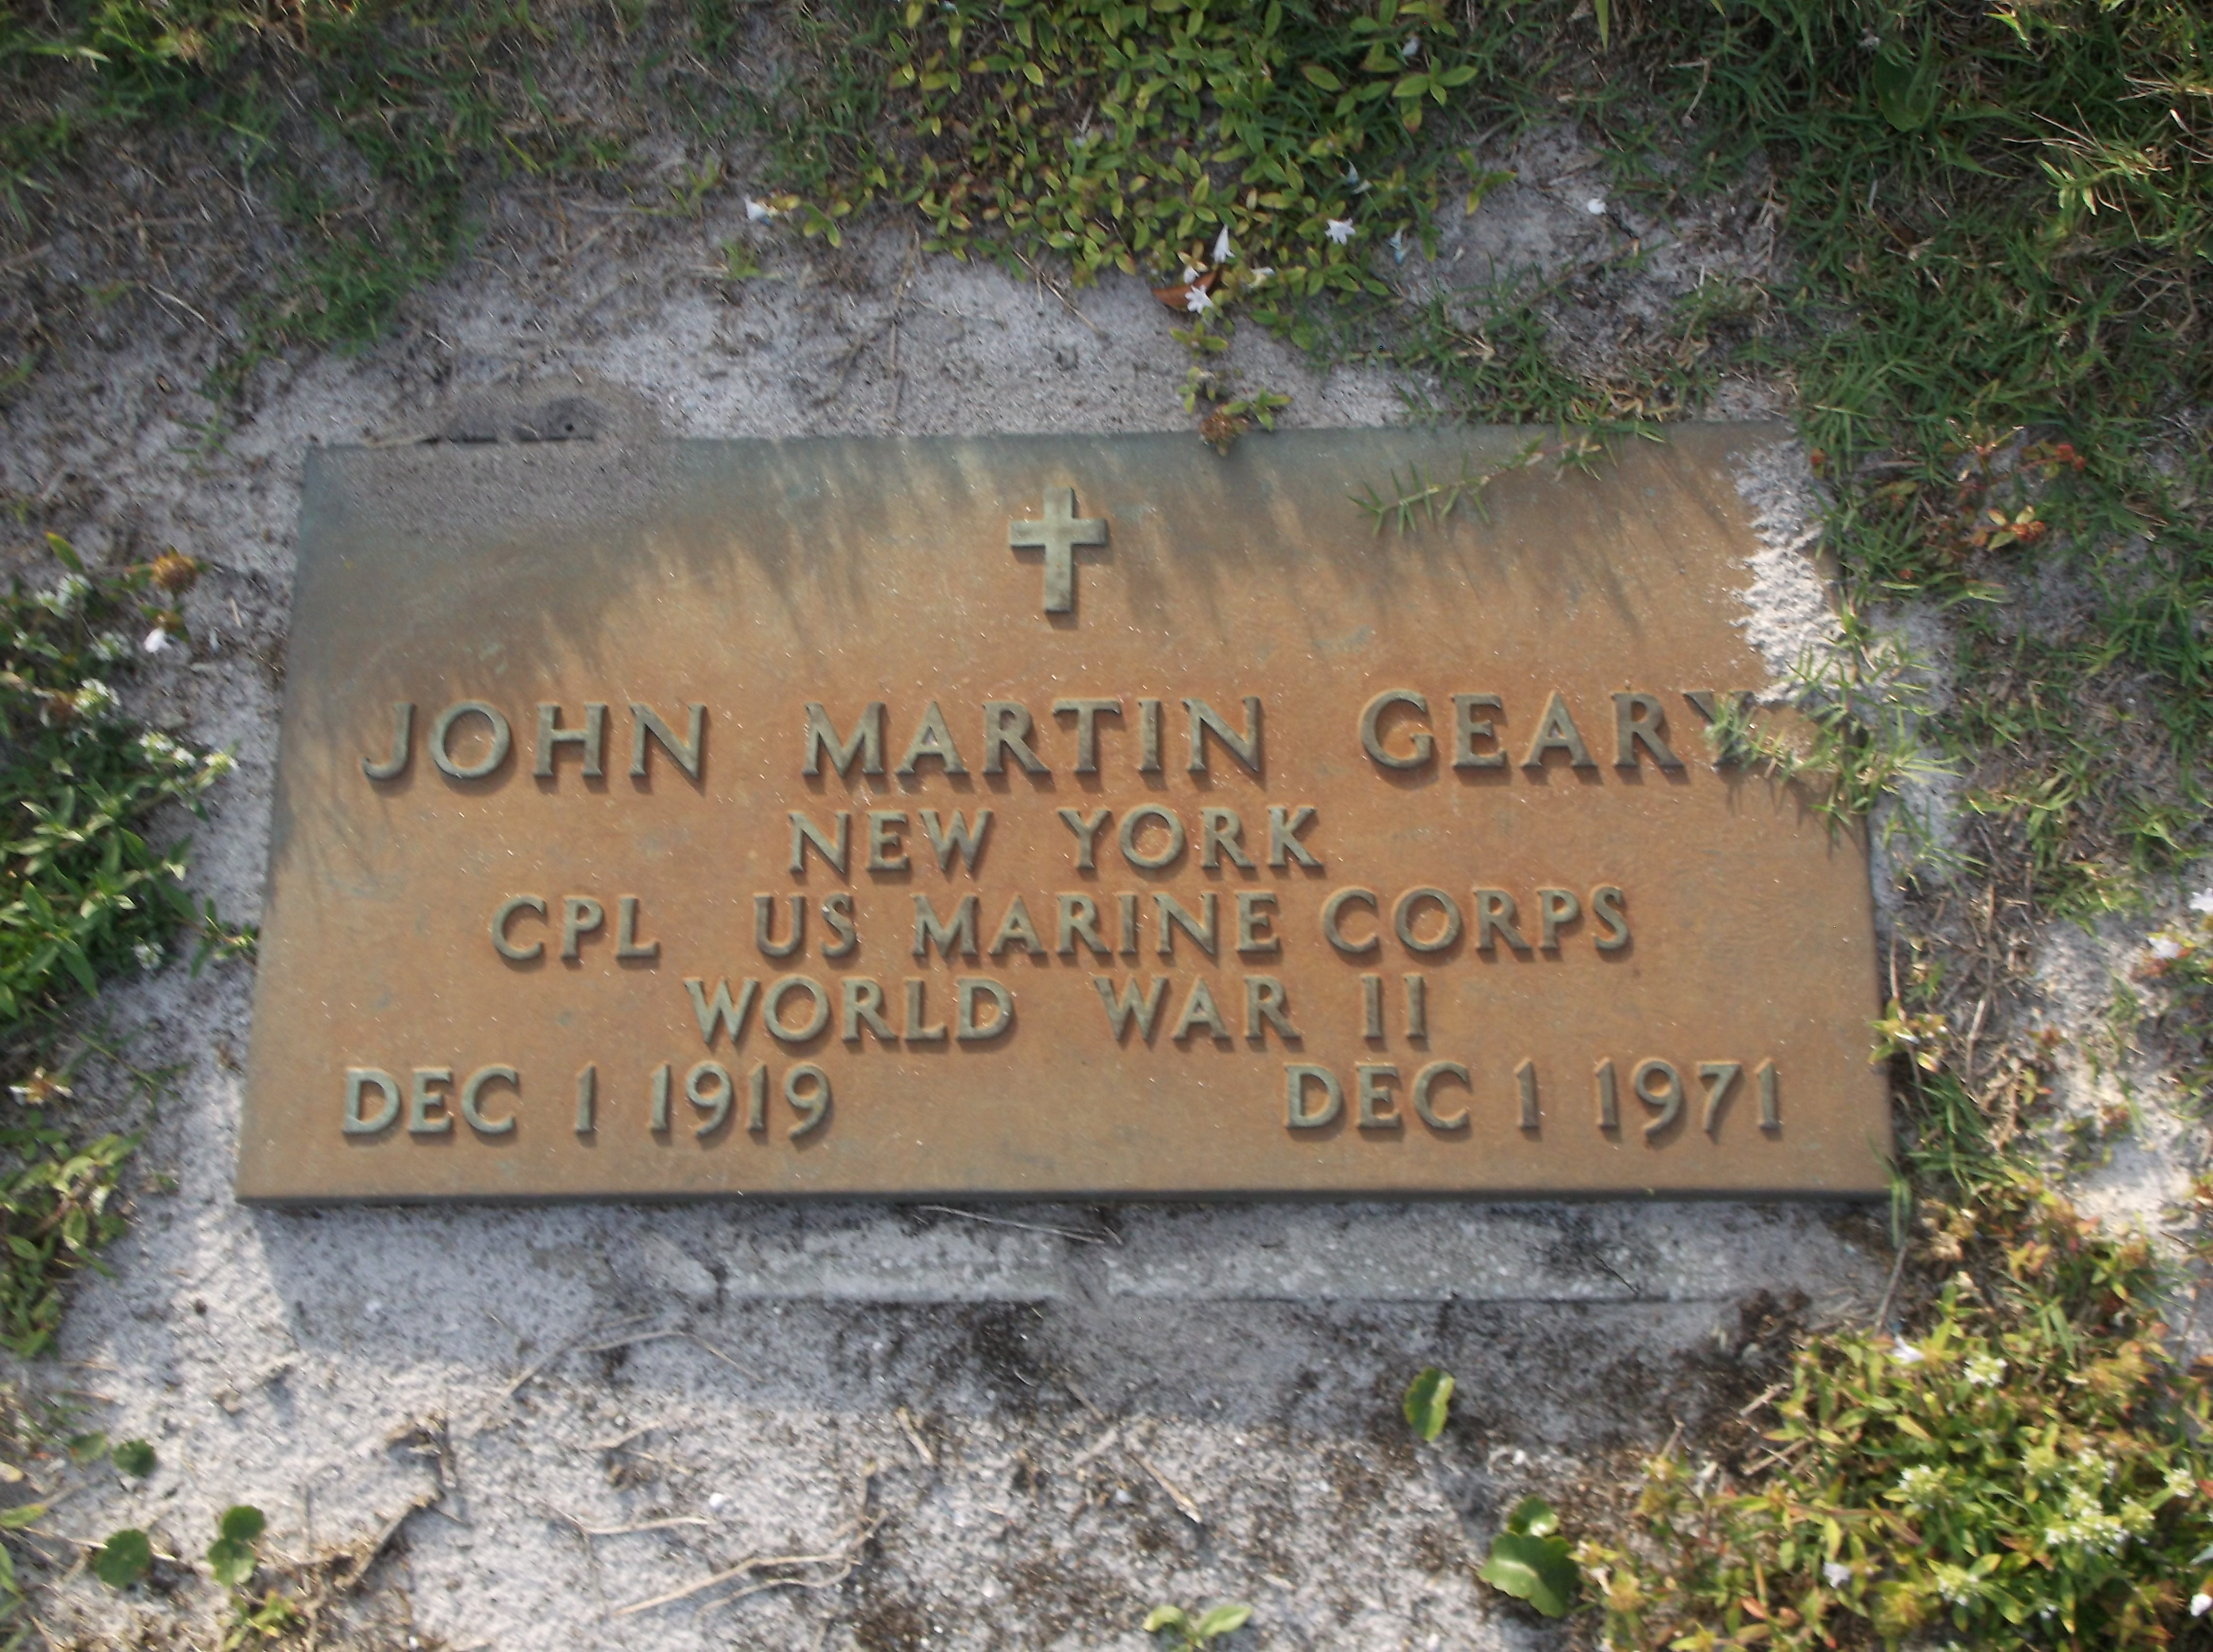 John Martin Geary